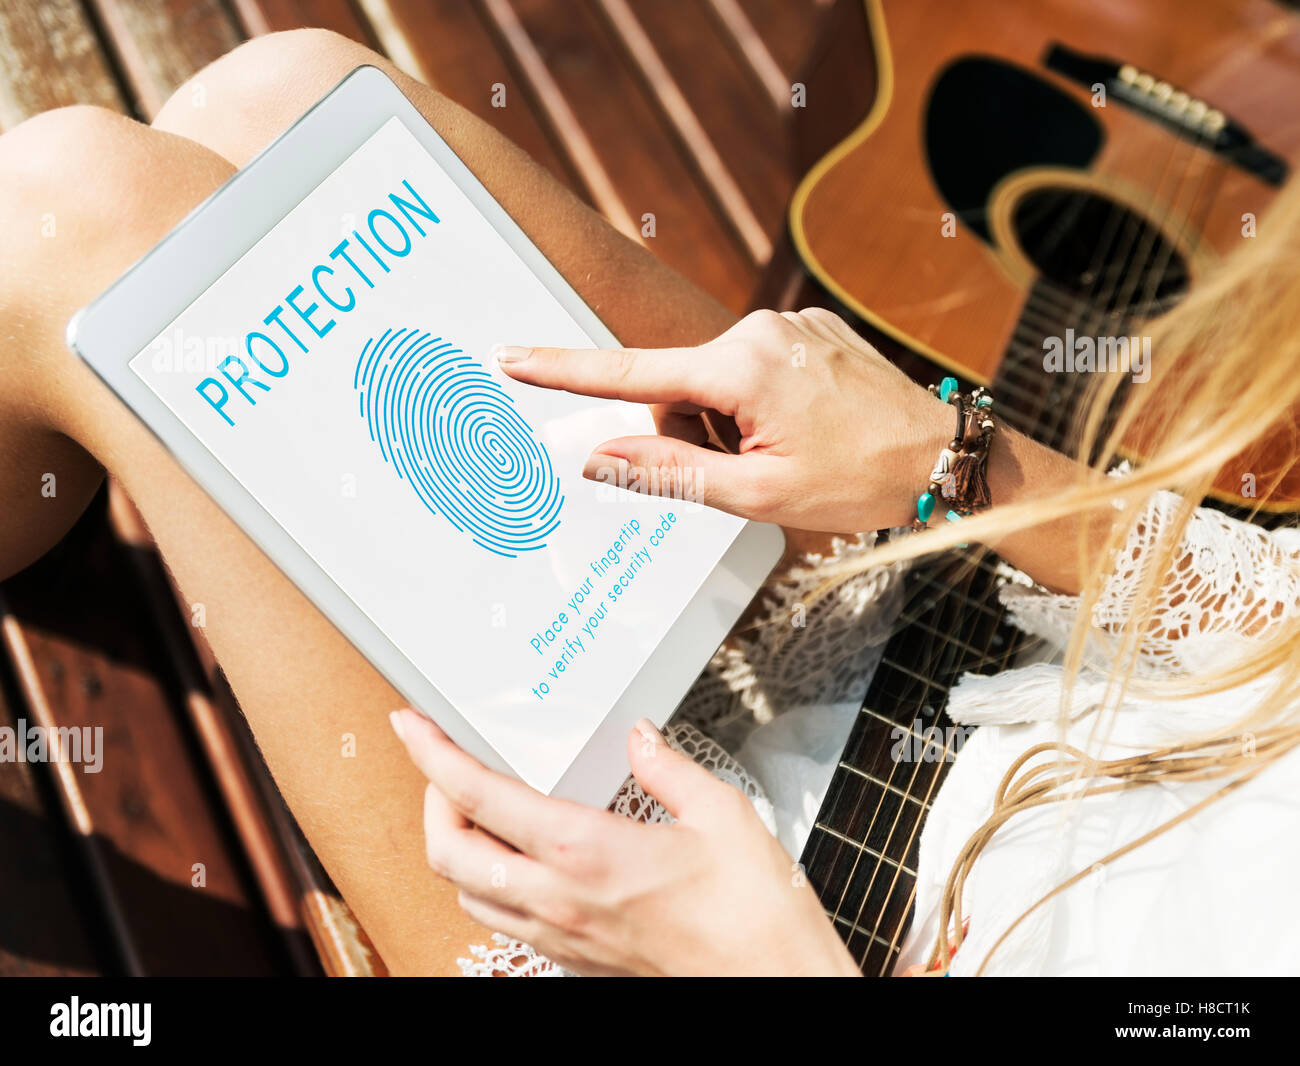 Fingerprint Password Biometrics Technology Concept Stock Photo